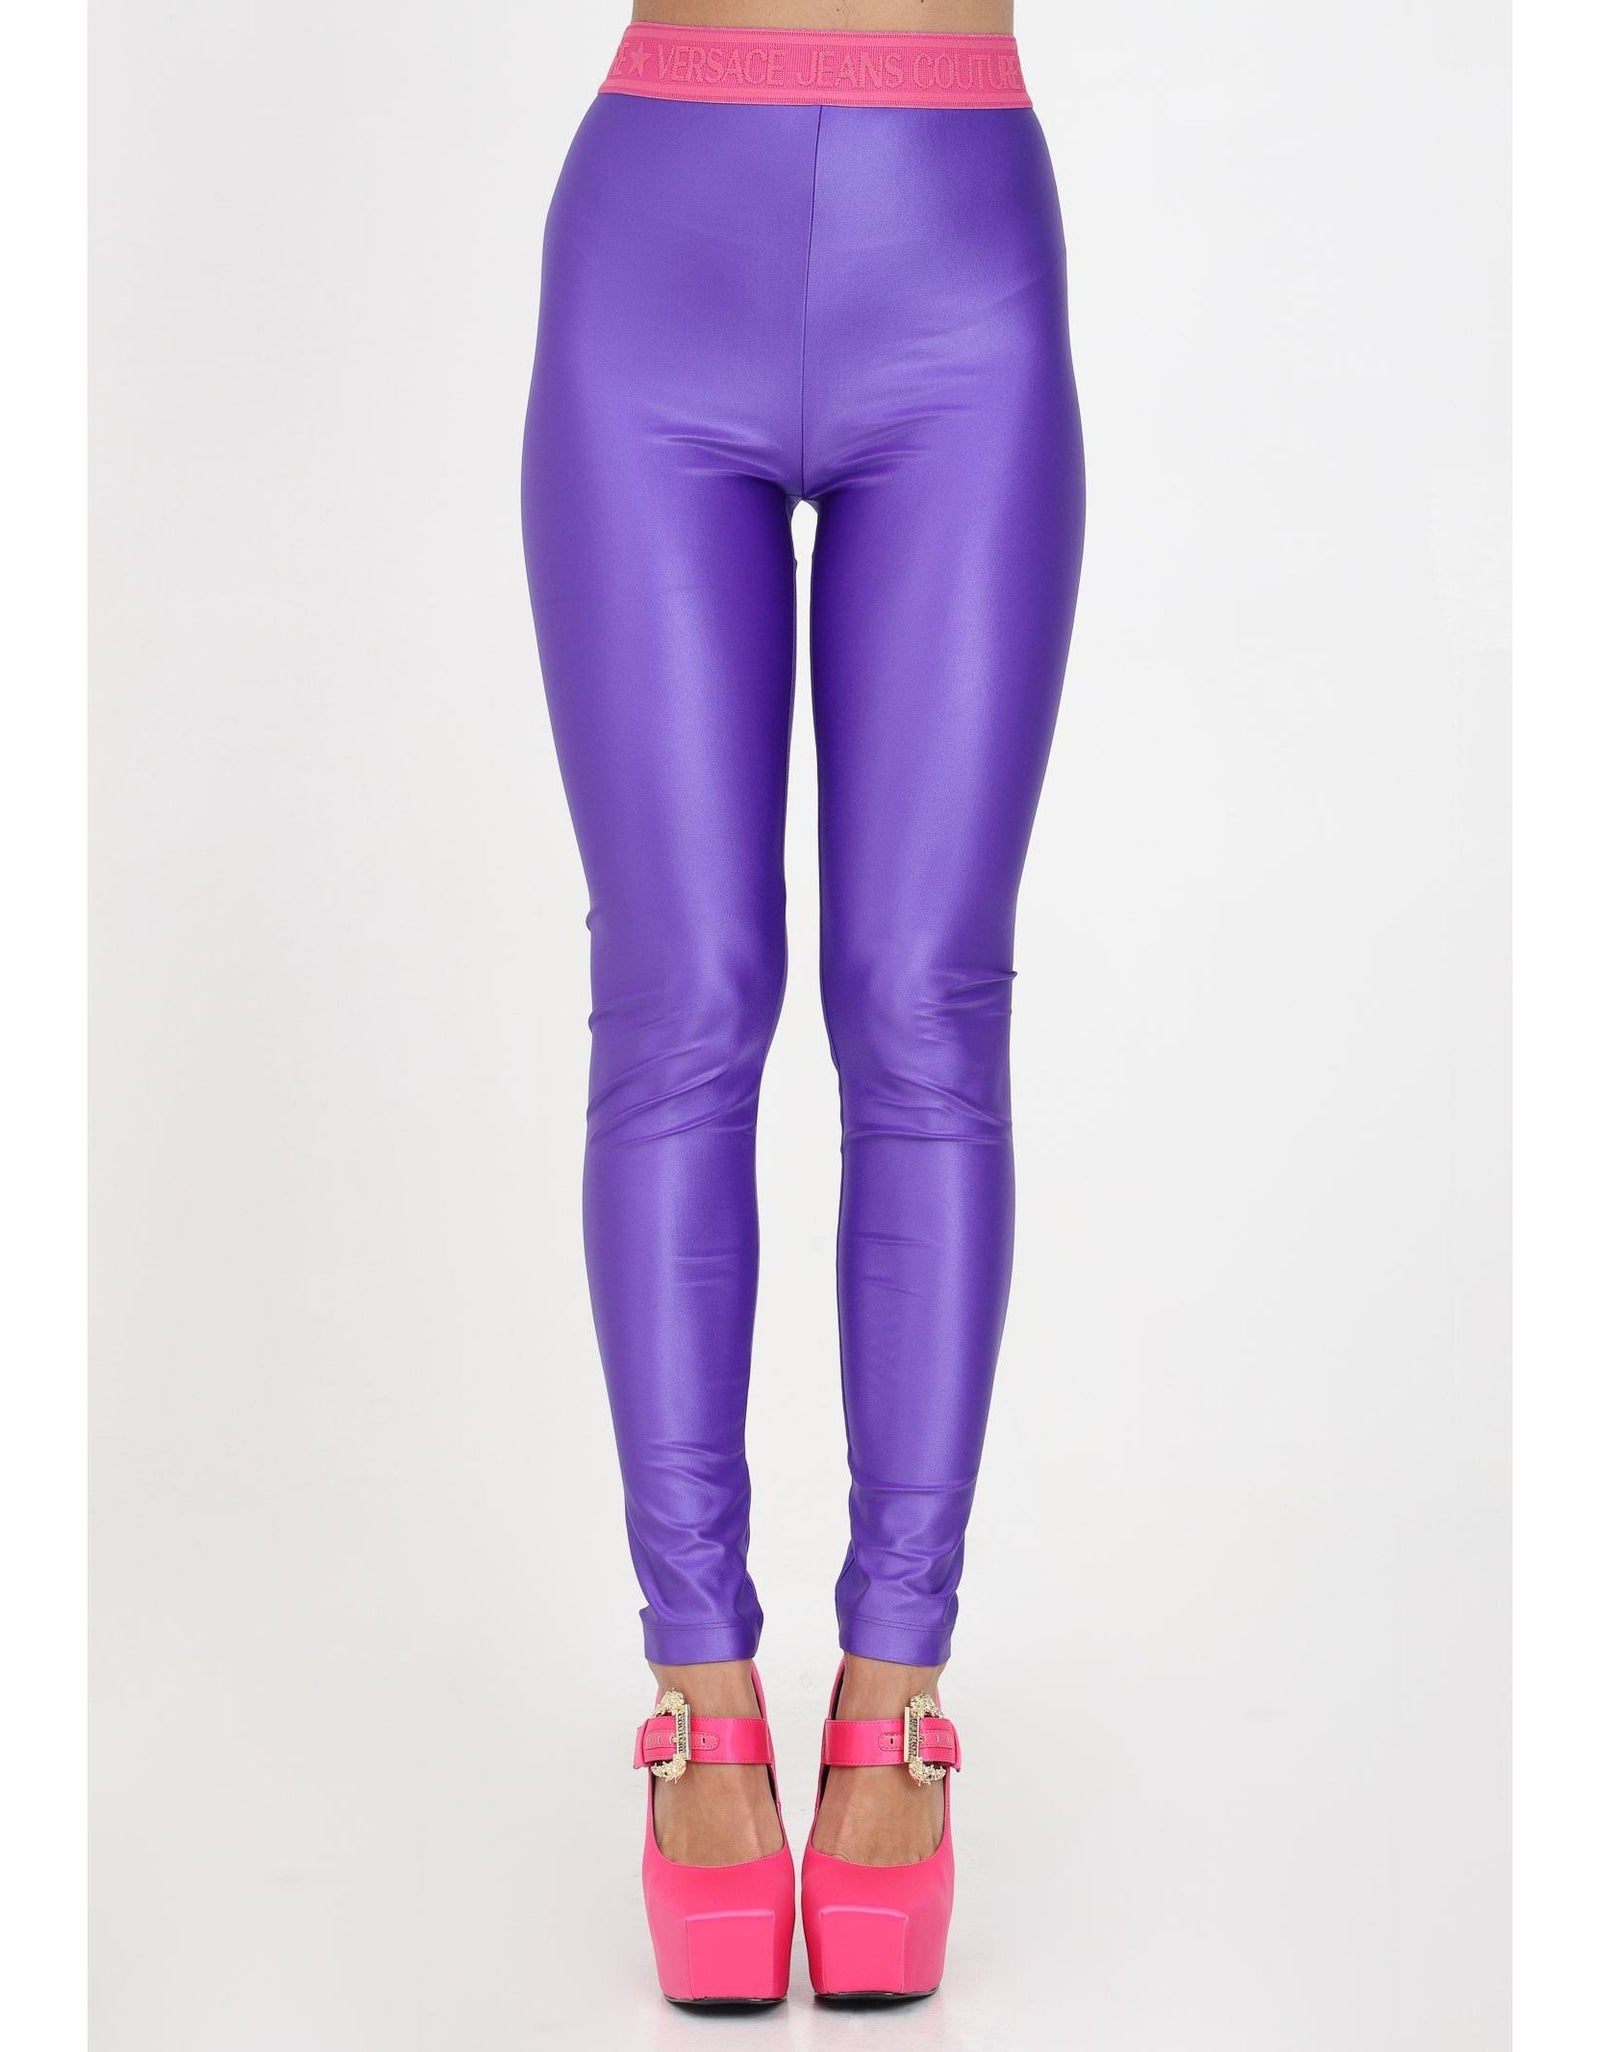 VERSACE JEANS COUTURE, Dark purple Women's Leggings